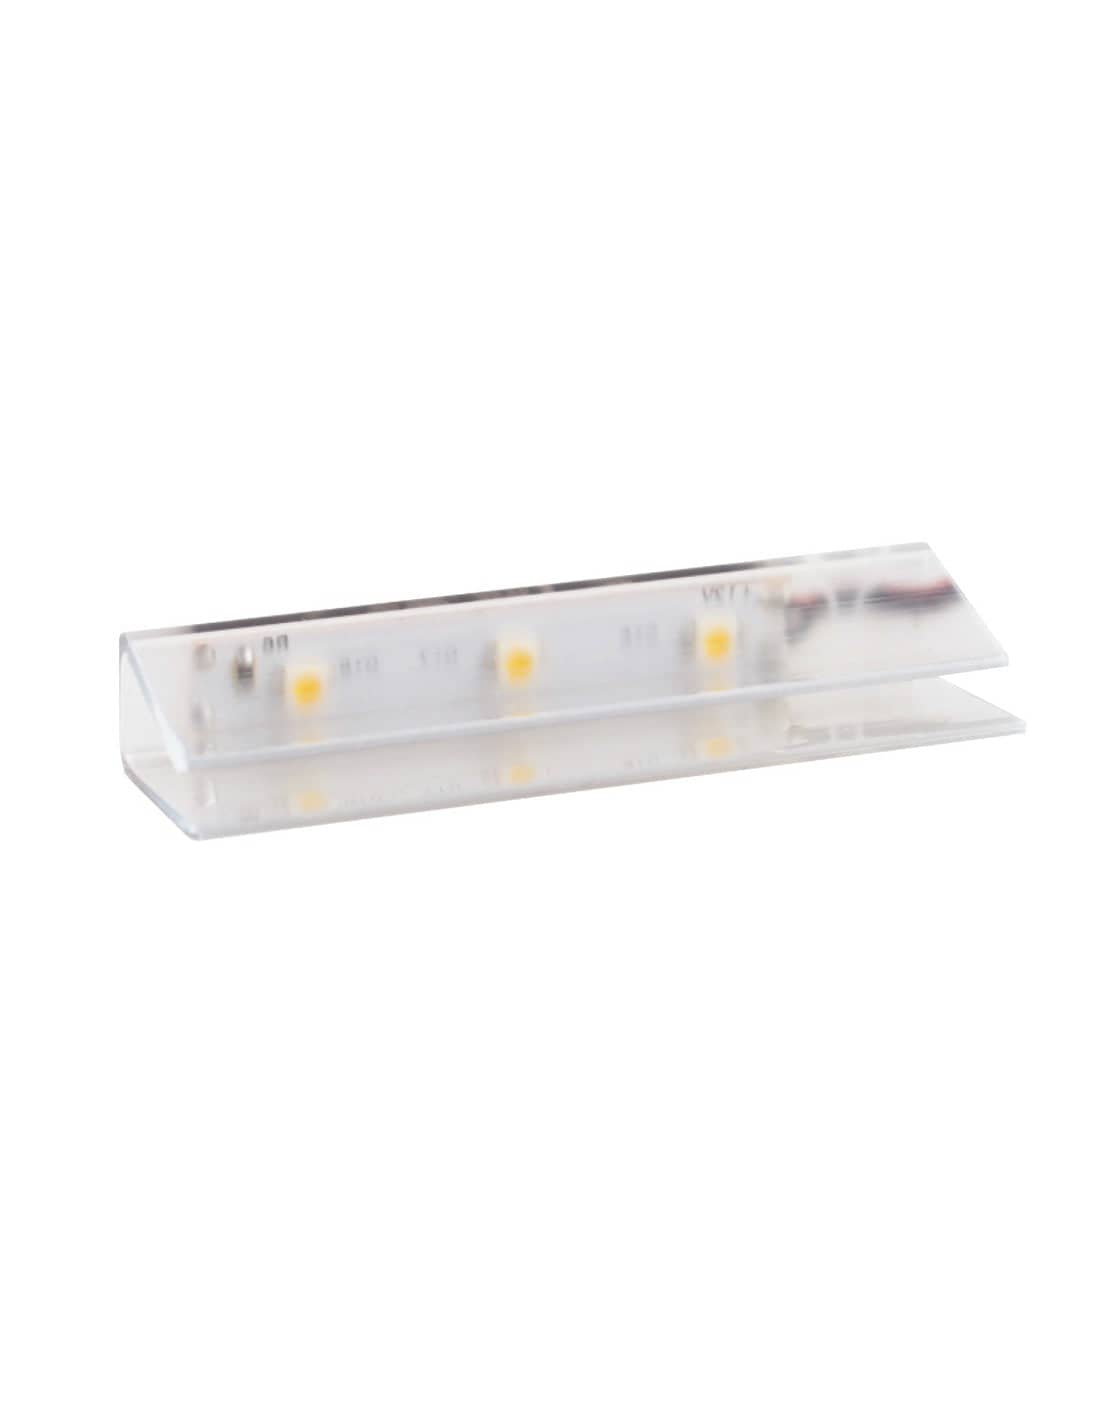 KLIPS - LED Plastic clip 0.25W Cool White 60K   KLIPS-P-3528-60K-01